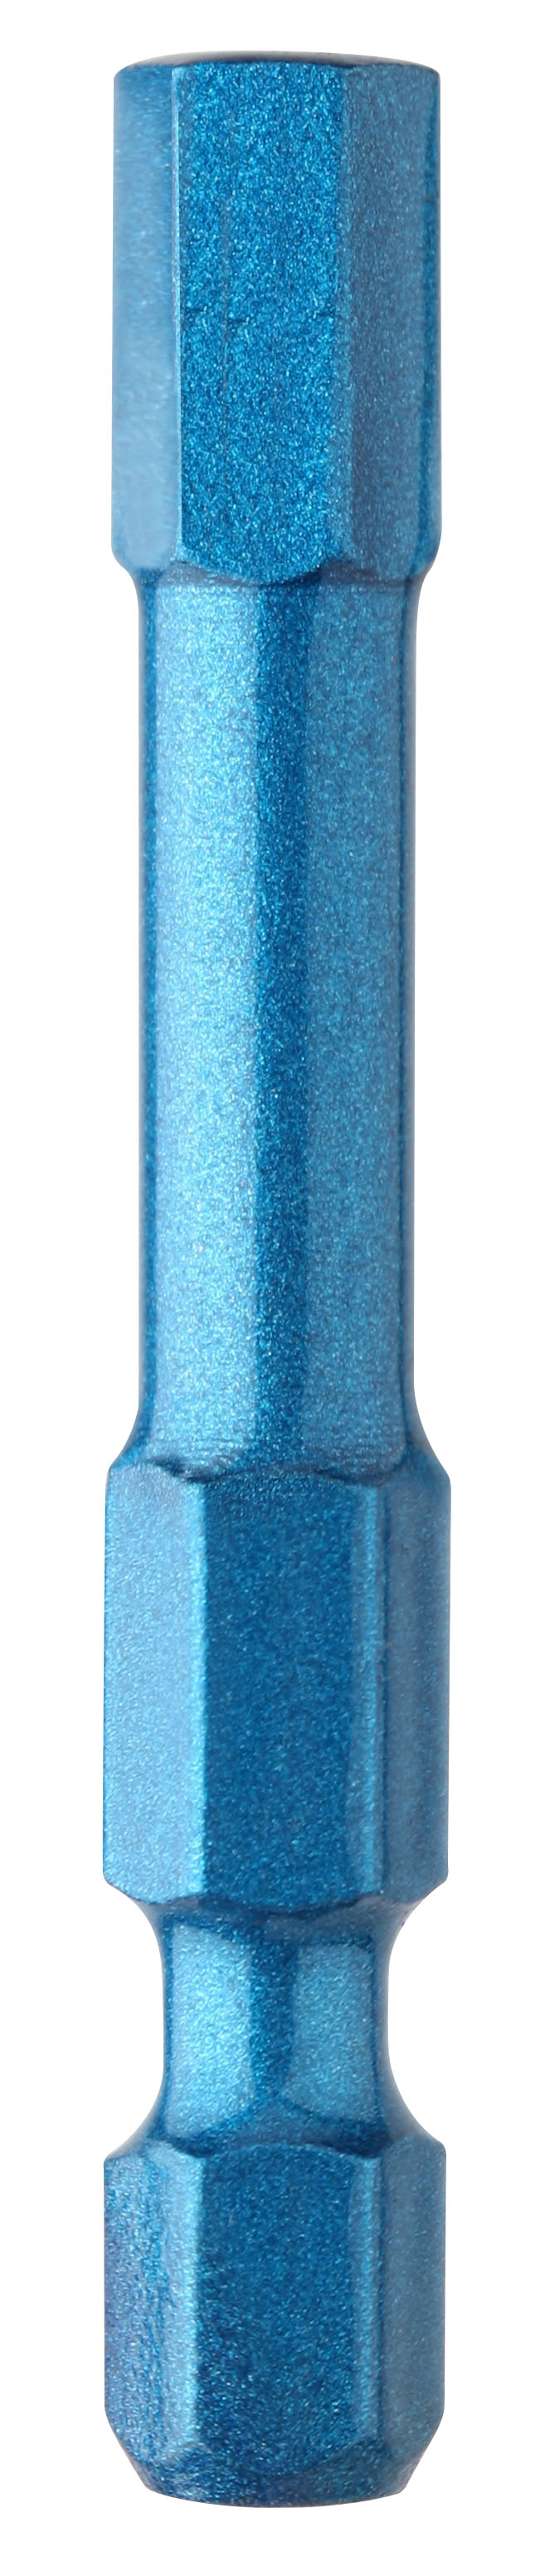 Screwdriving Blue shock bit Blue-Shock impact bit Hexa - 50 mm length - U615H5 50.jpg